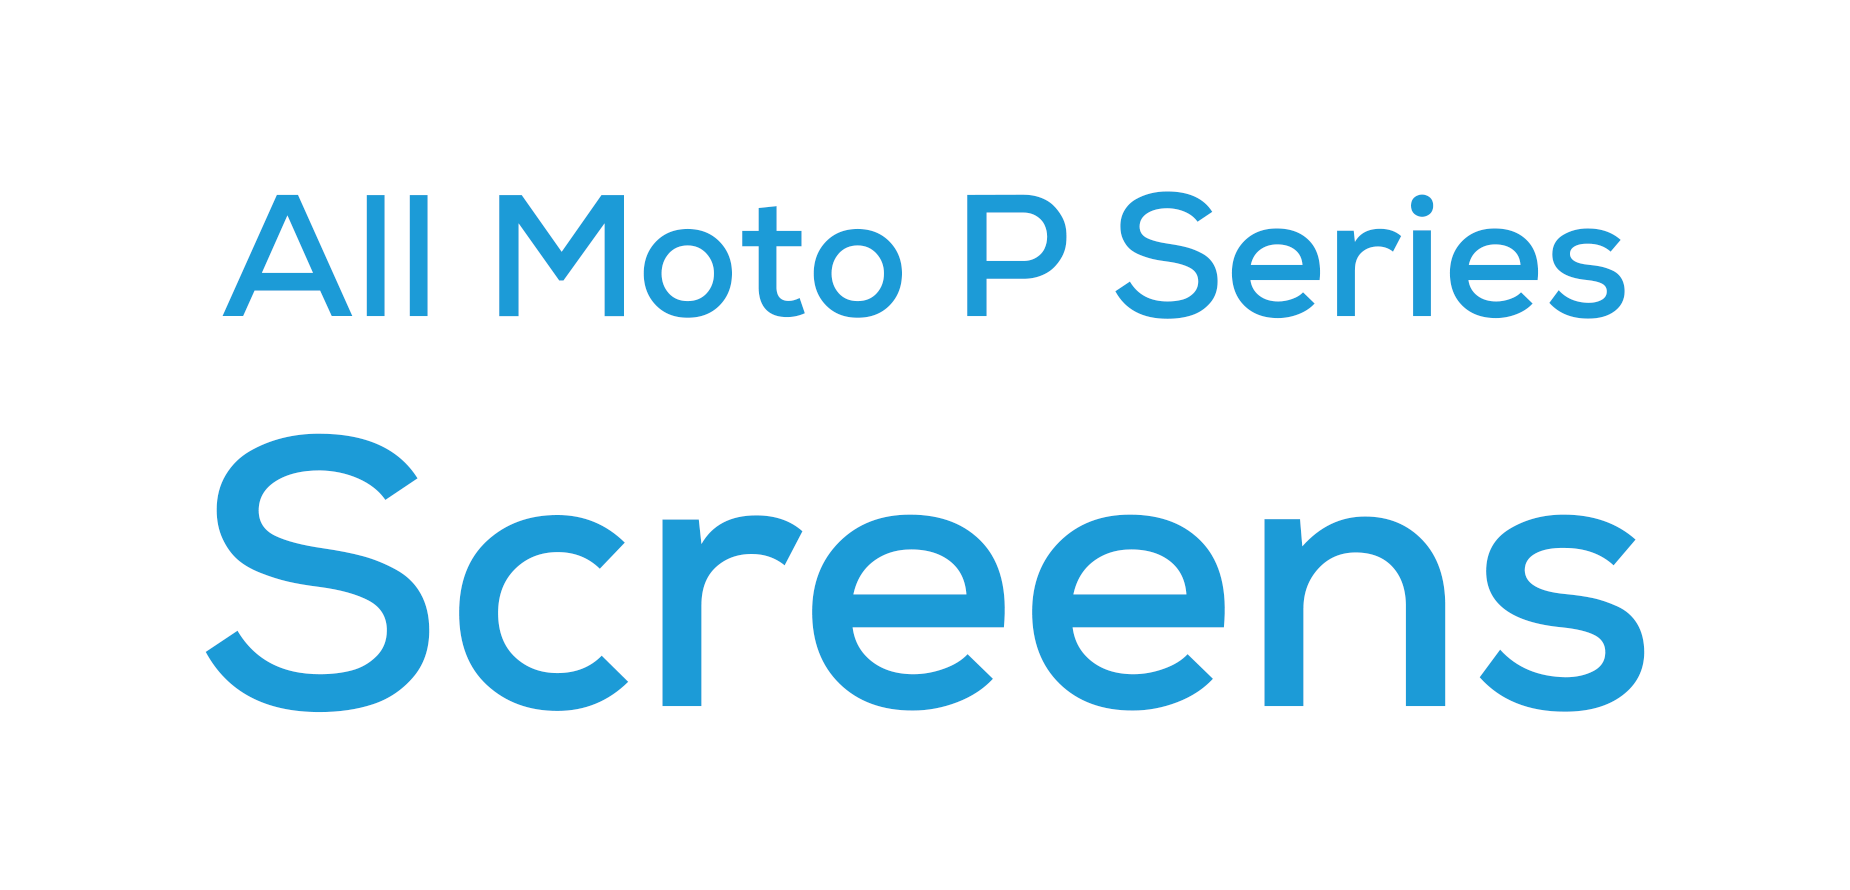 All Moto P Series Screens